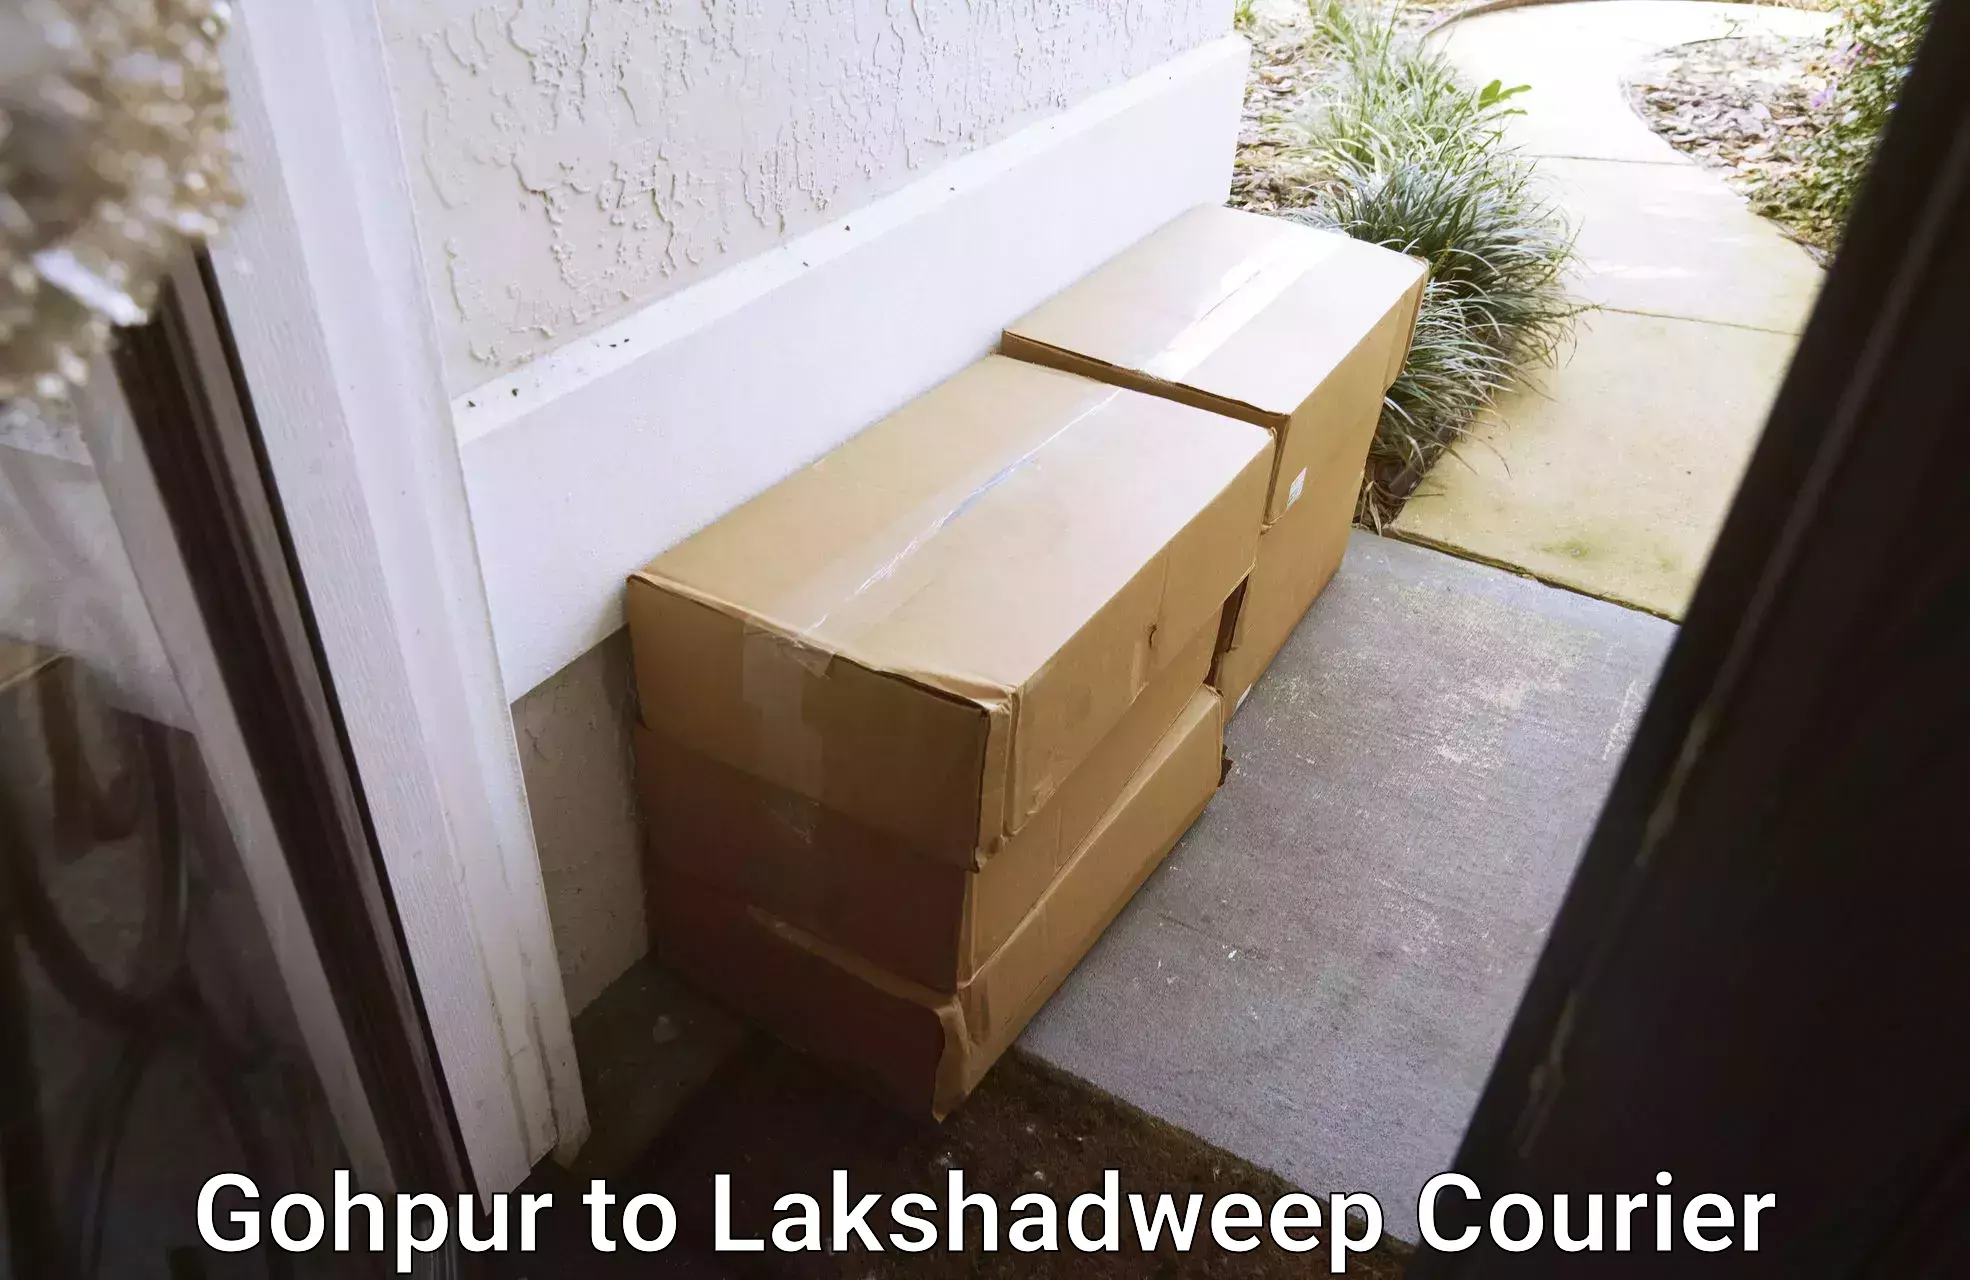 Global logistics network Gohpur to Lakshadweep